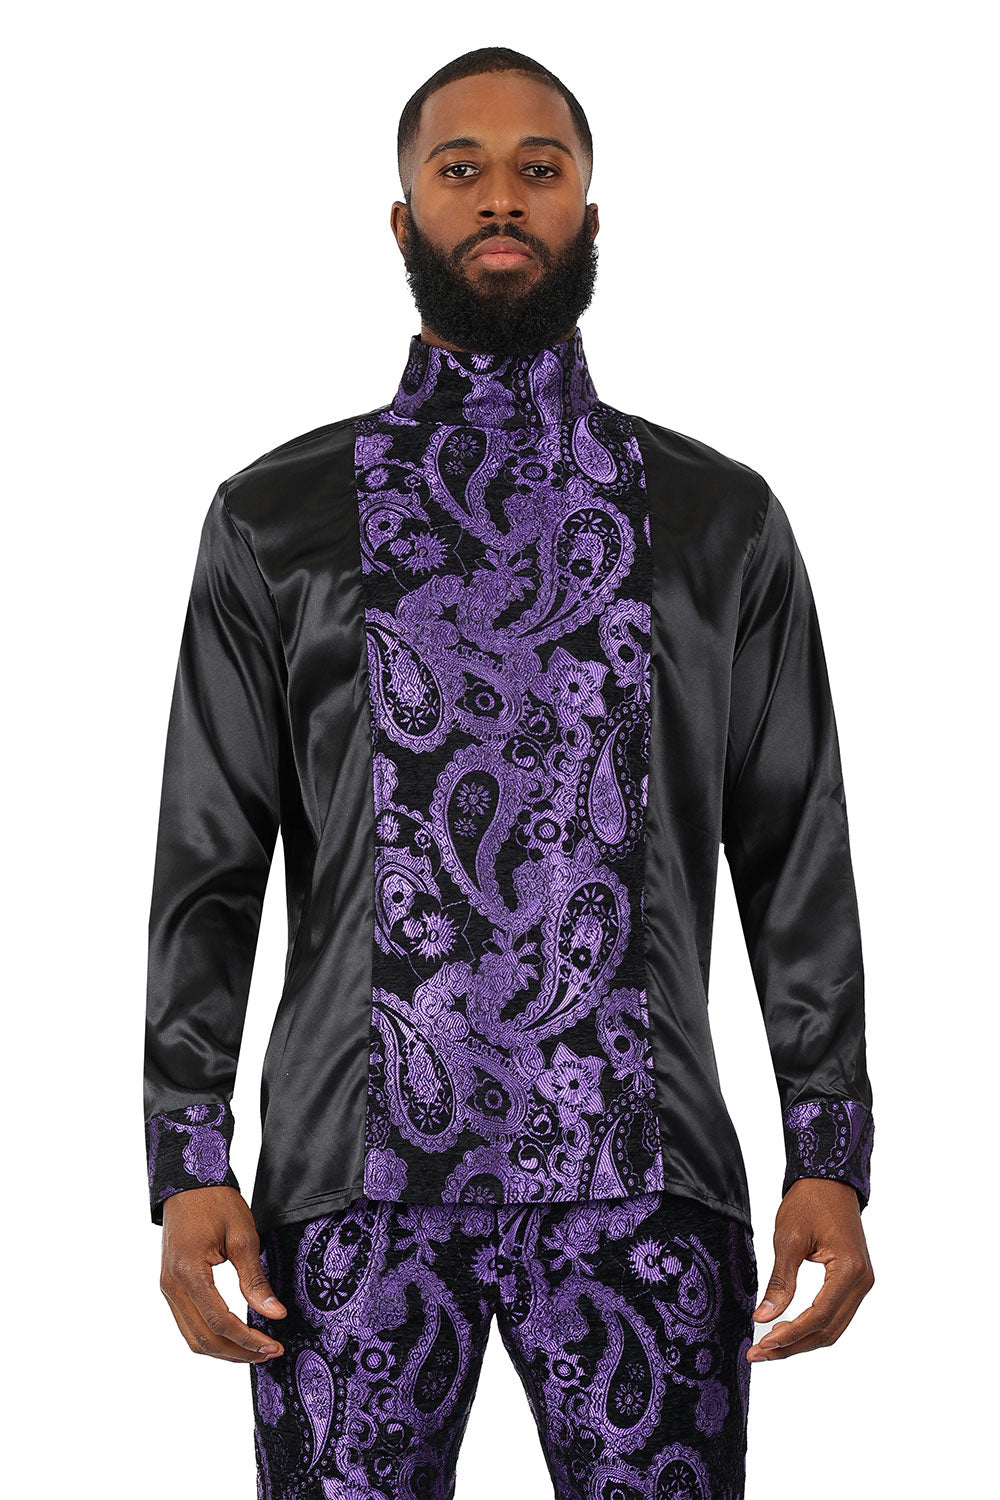 BARABAS Men's Paisley Long Sleeve Turtle Neck shirt 3MT05 Black and Purple